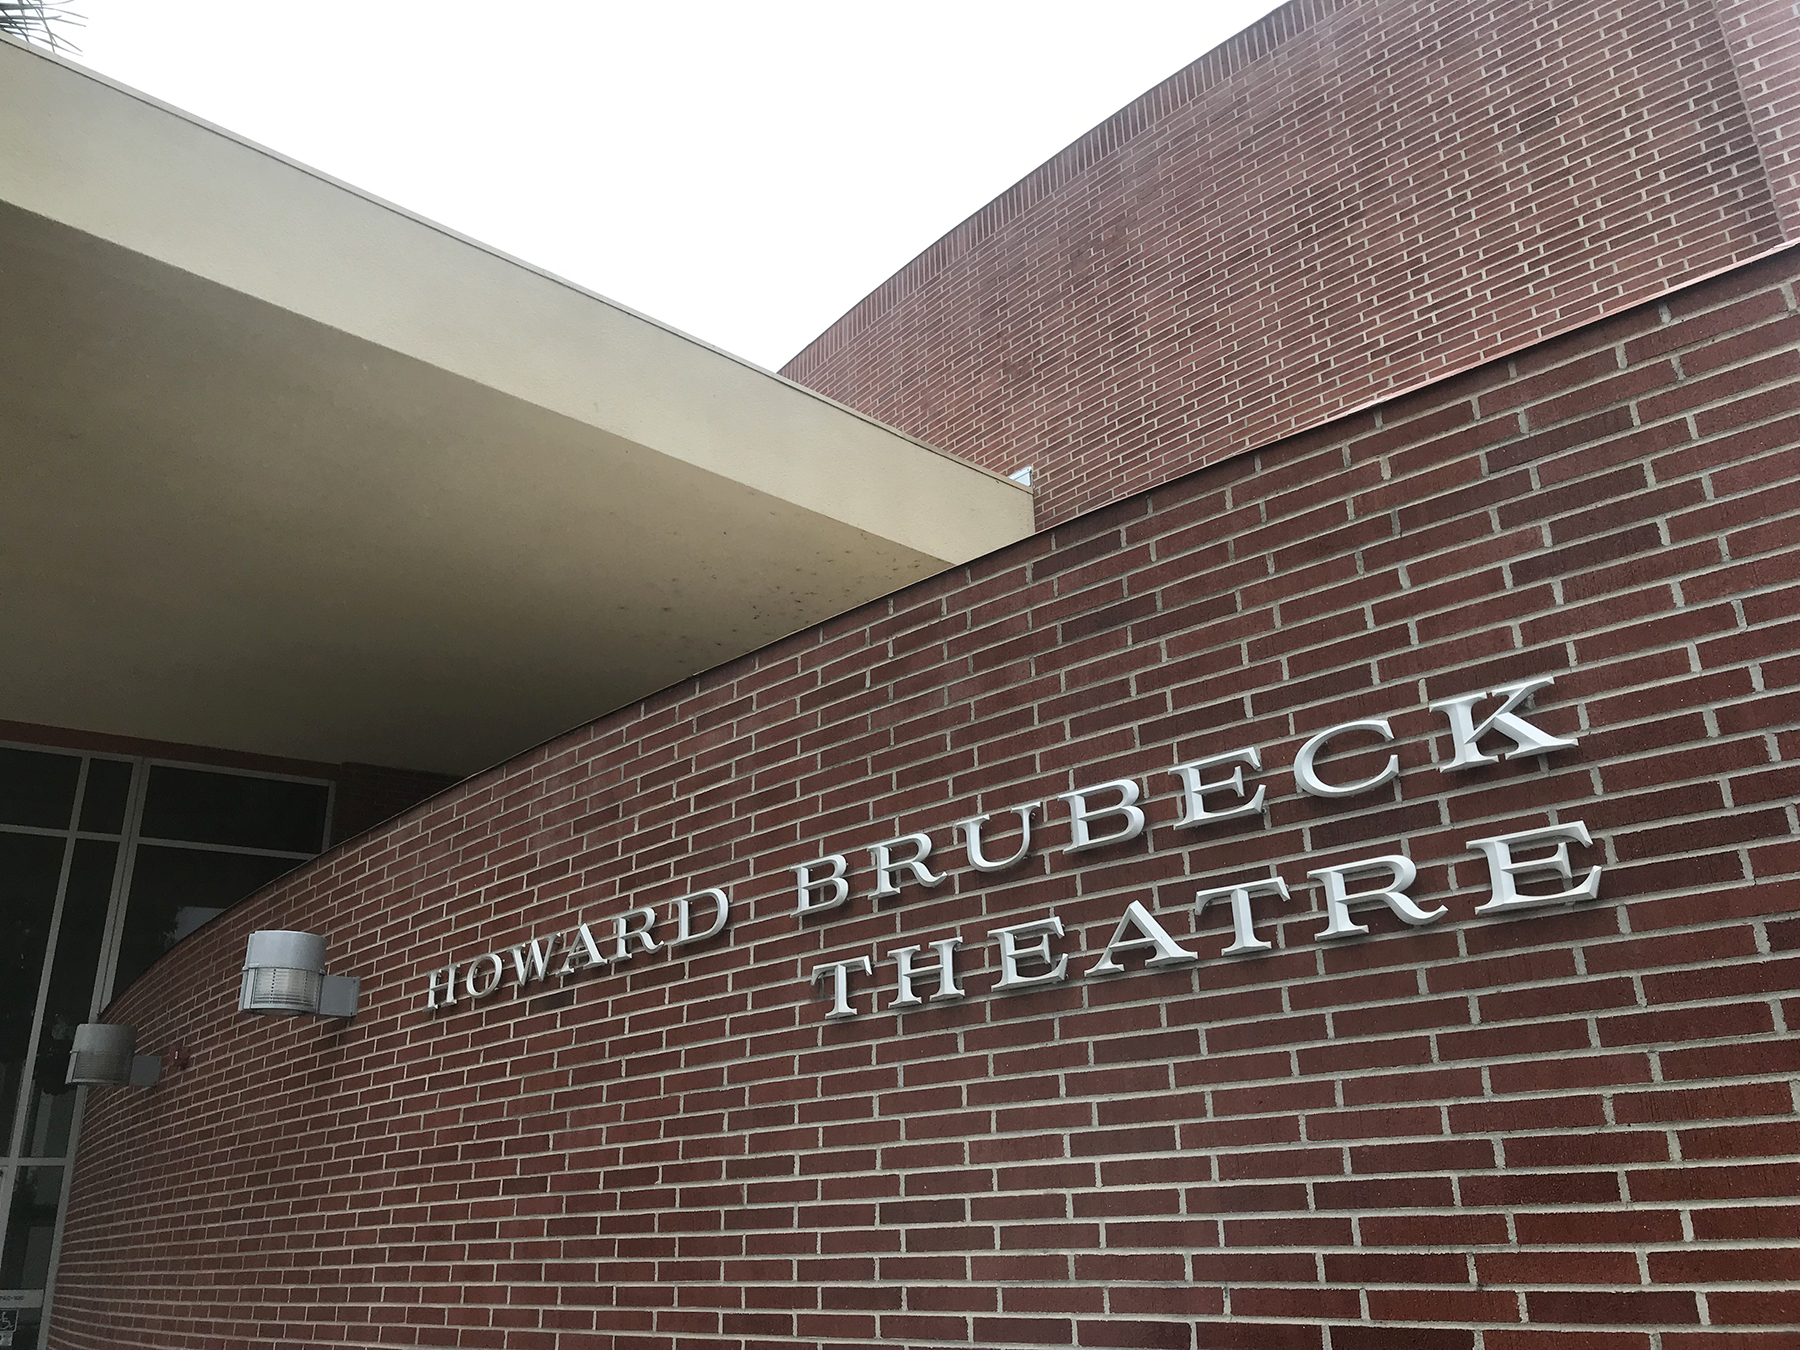 Howard Brubeck theatre at Palomar